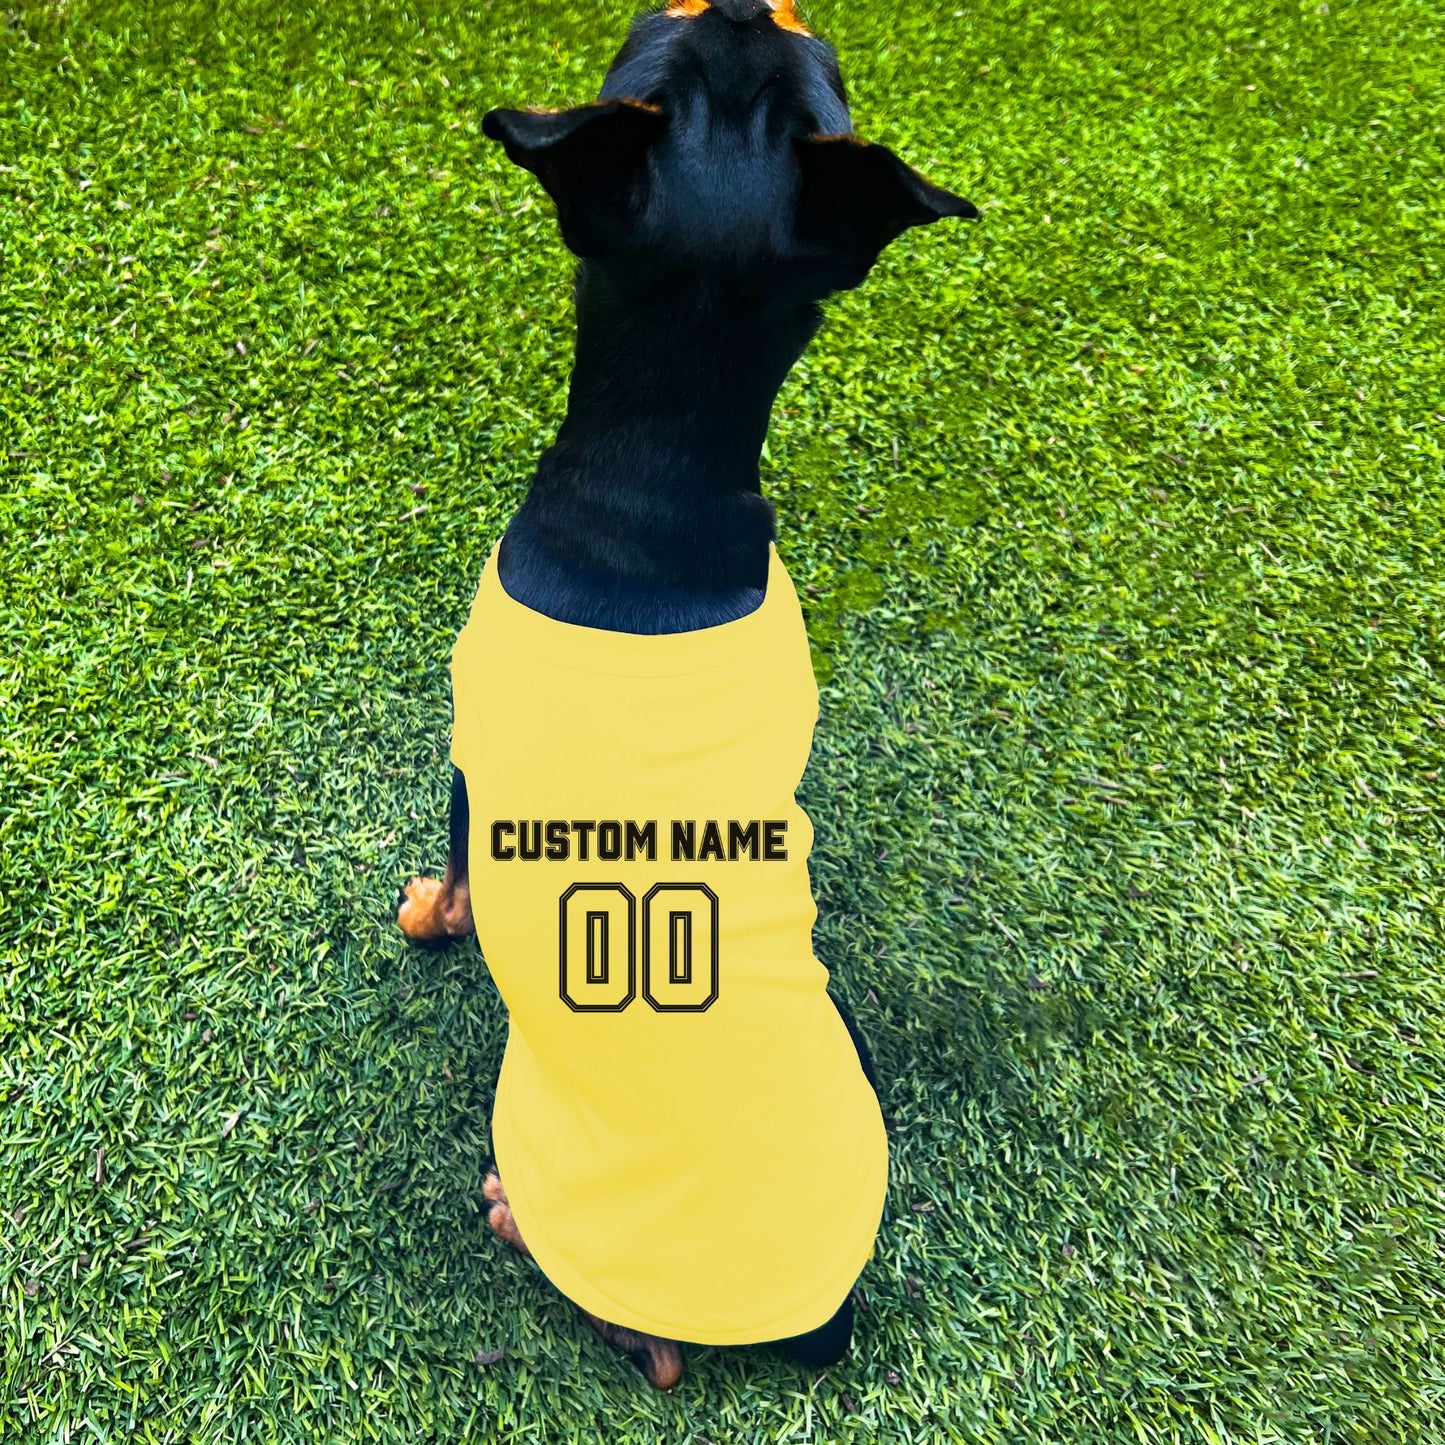 "Team Jersey 00" Custom Dog Shirt